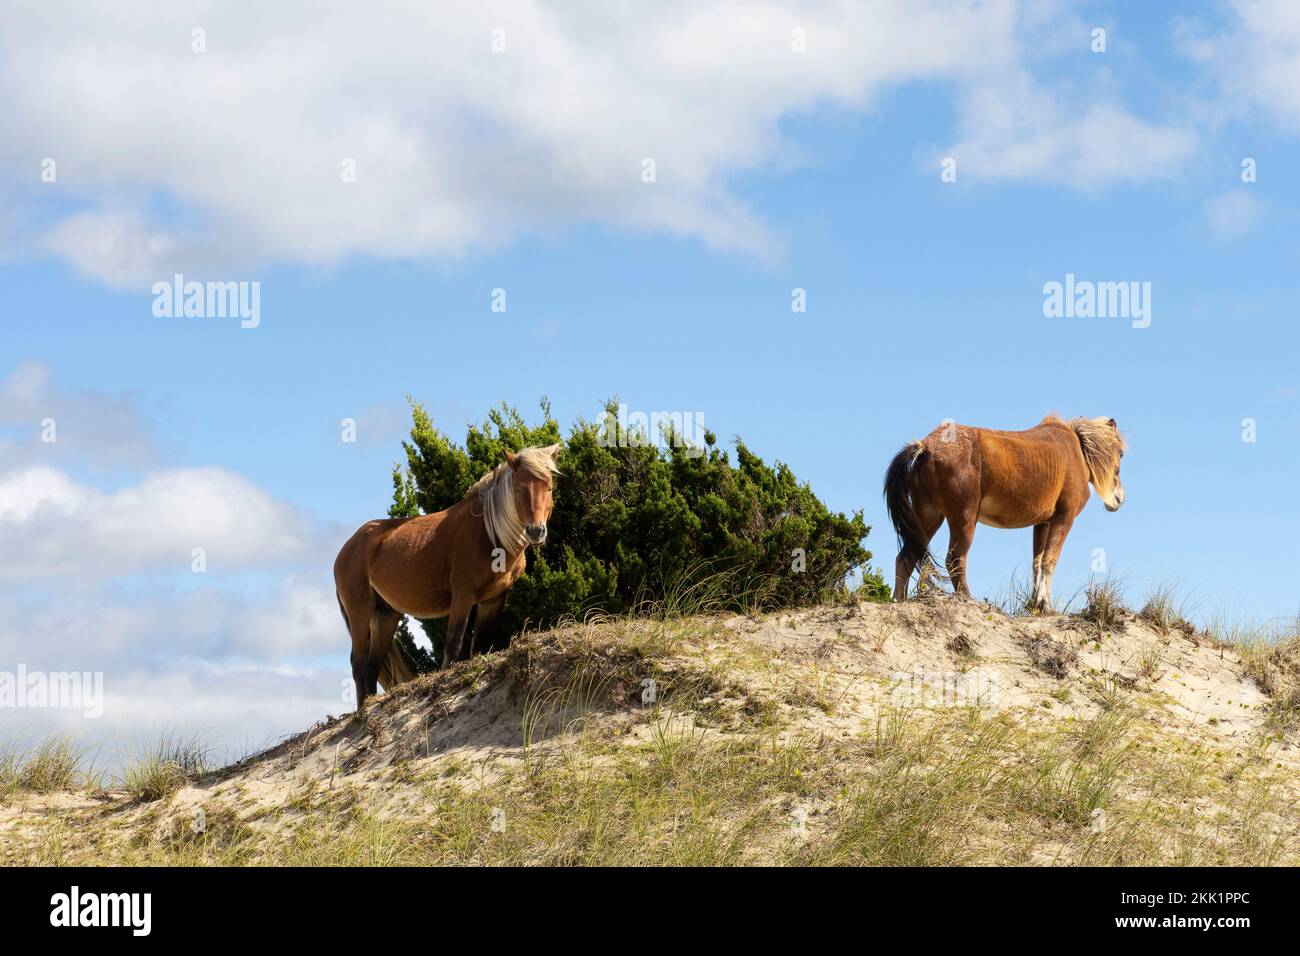 Wild horses (Equus ferus) standing on coastal beach hill with bush Stock Photo